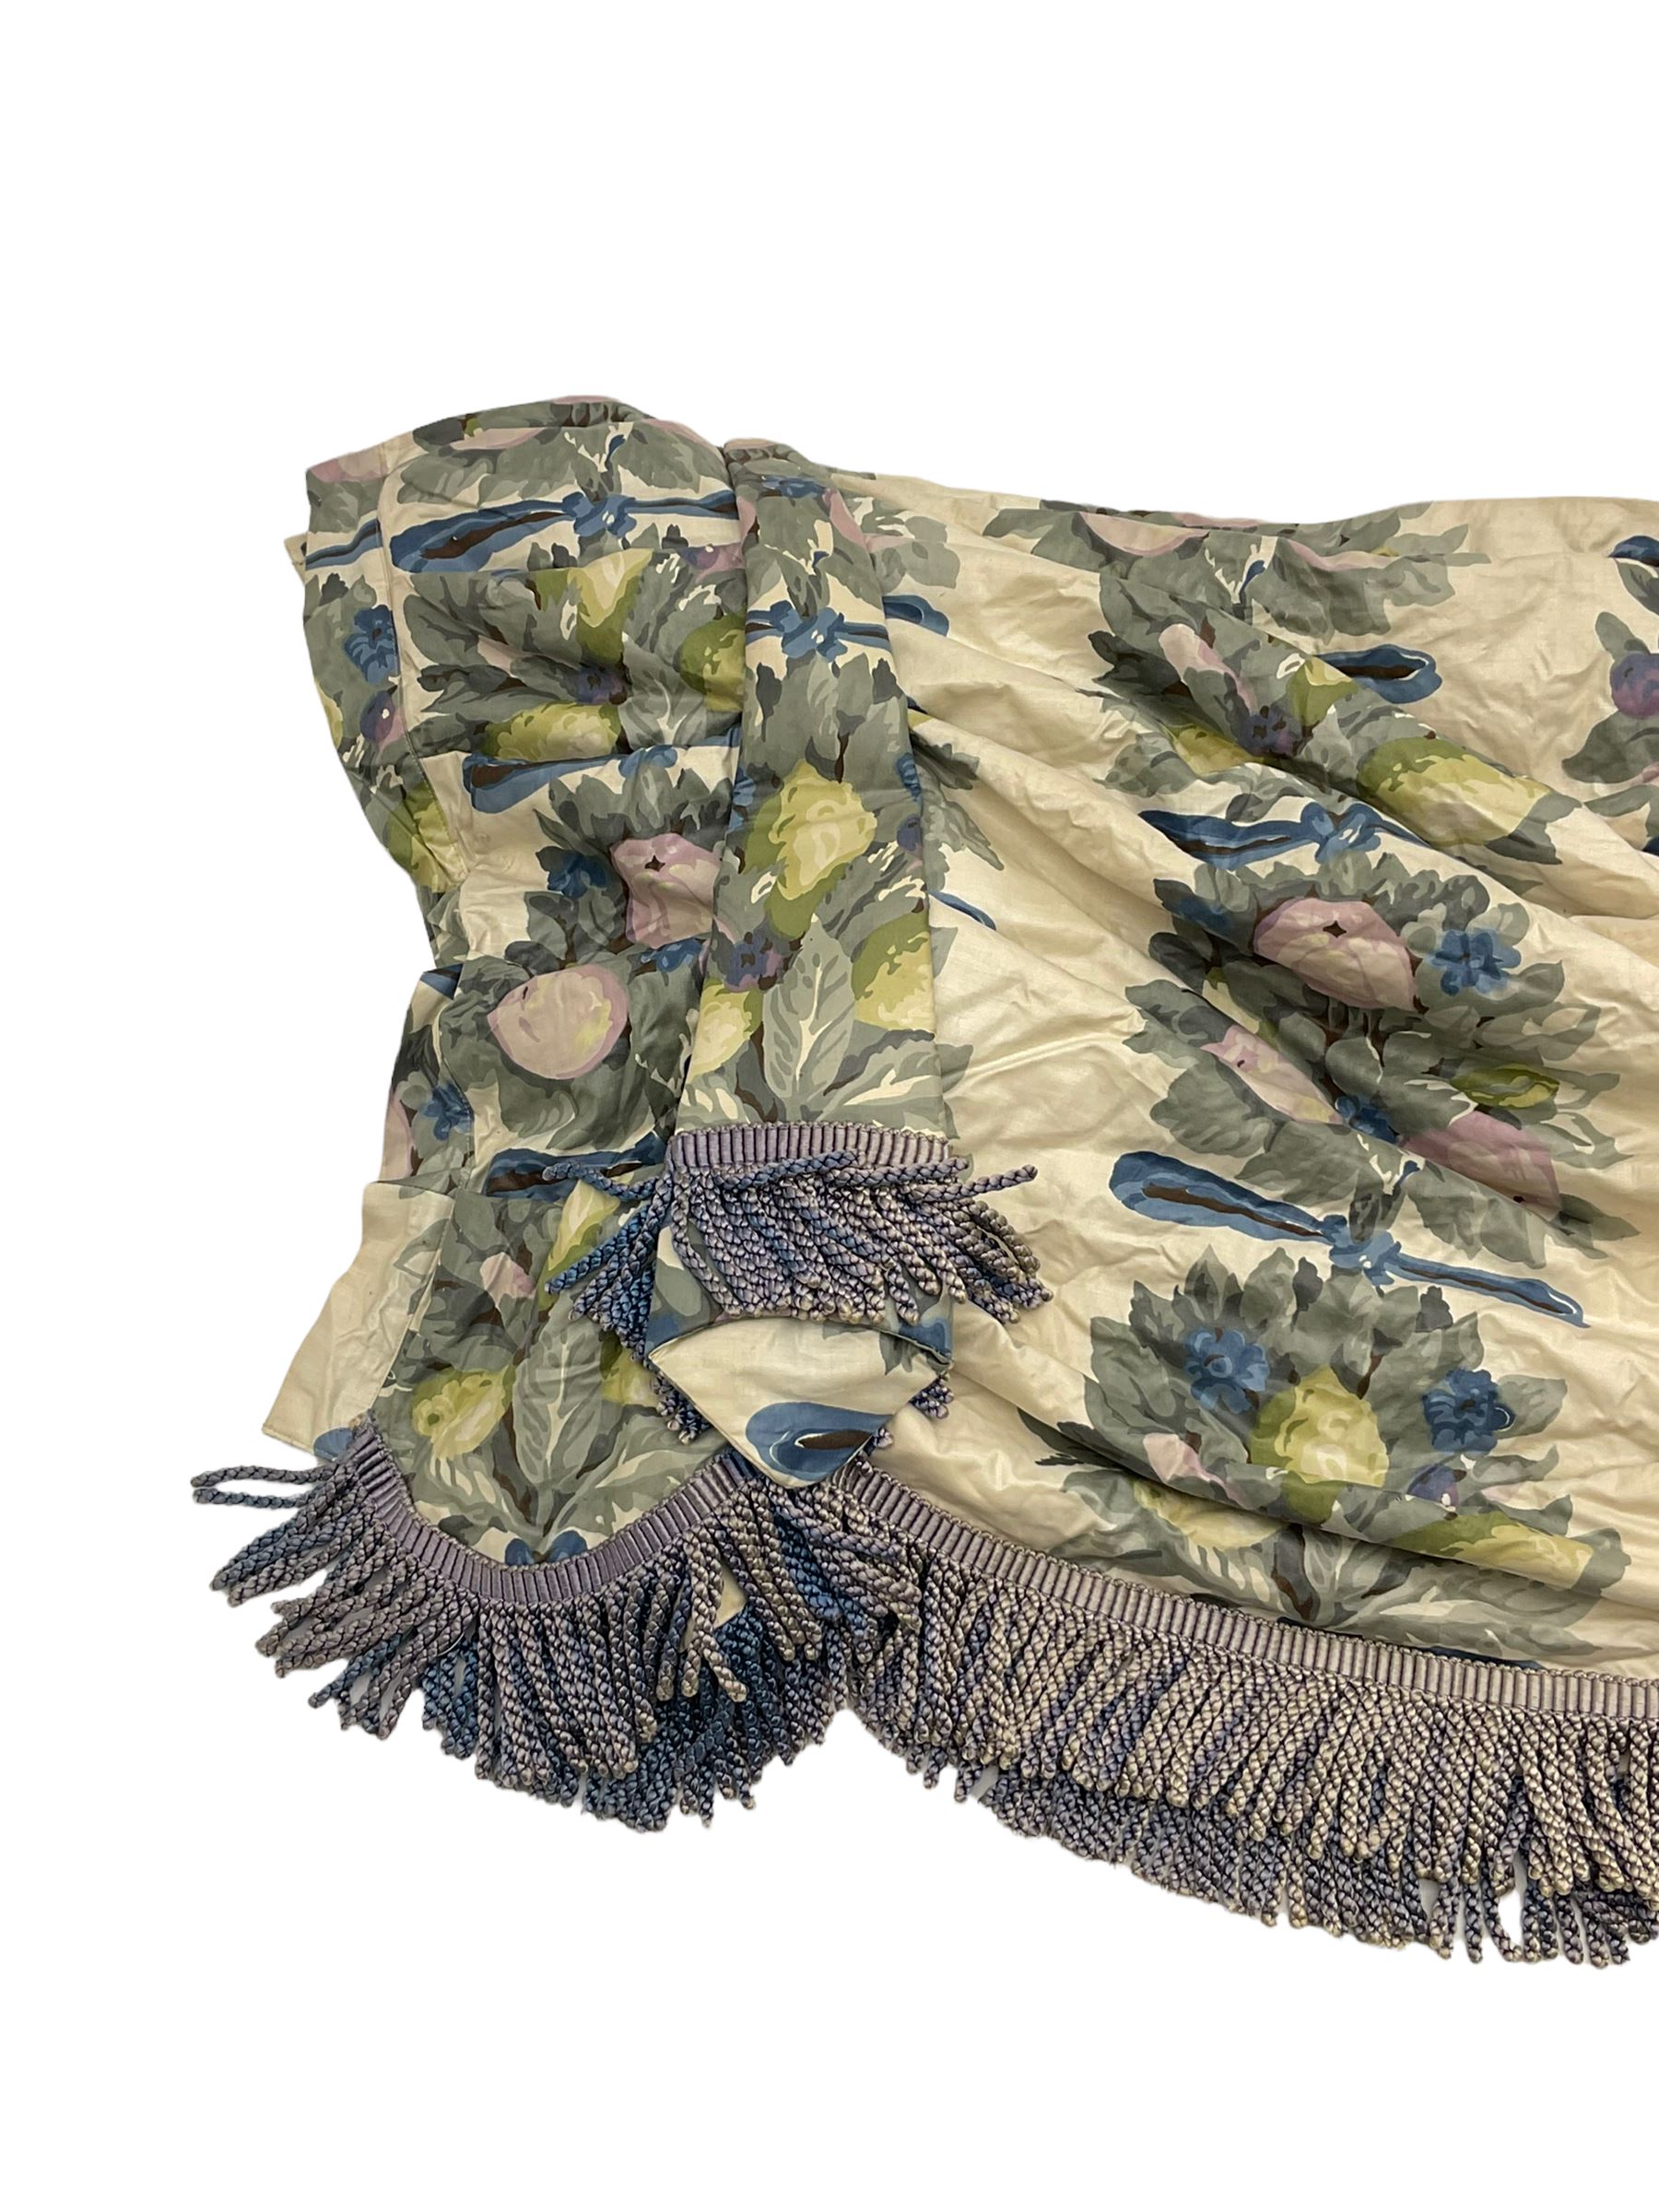 Charles Hammond of Sloane Square London - tasselled silk pelmet - Image 2 of 4